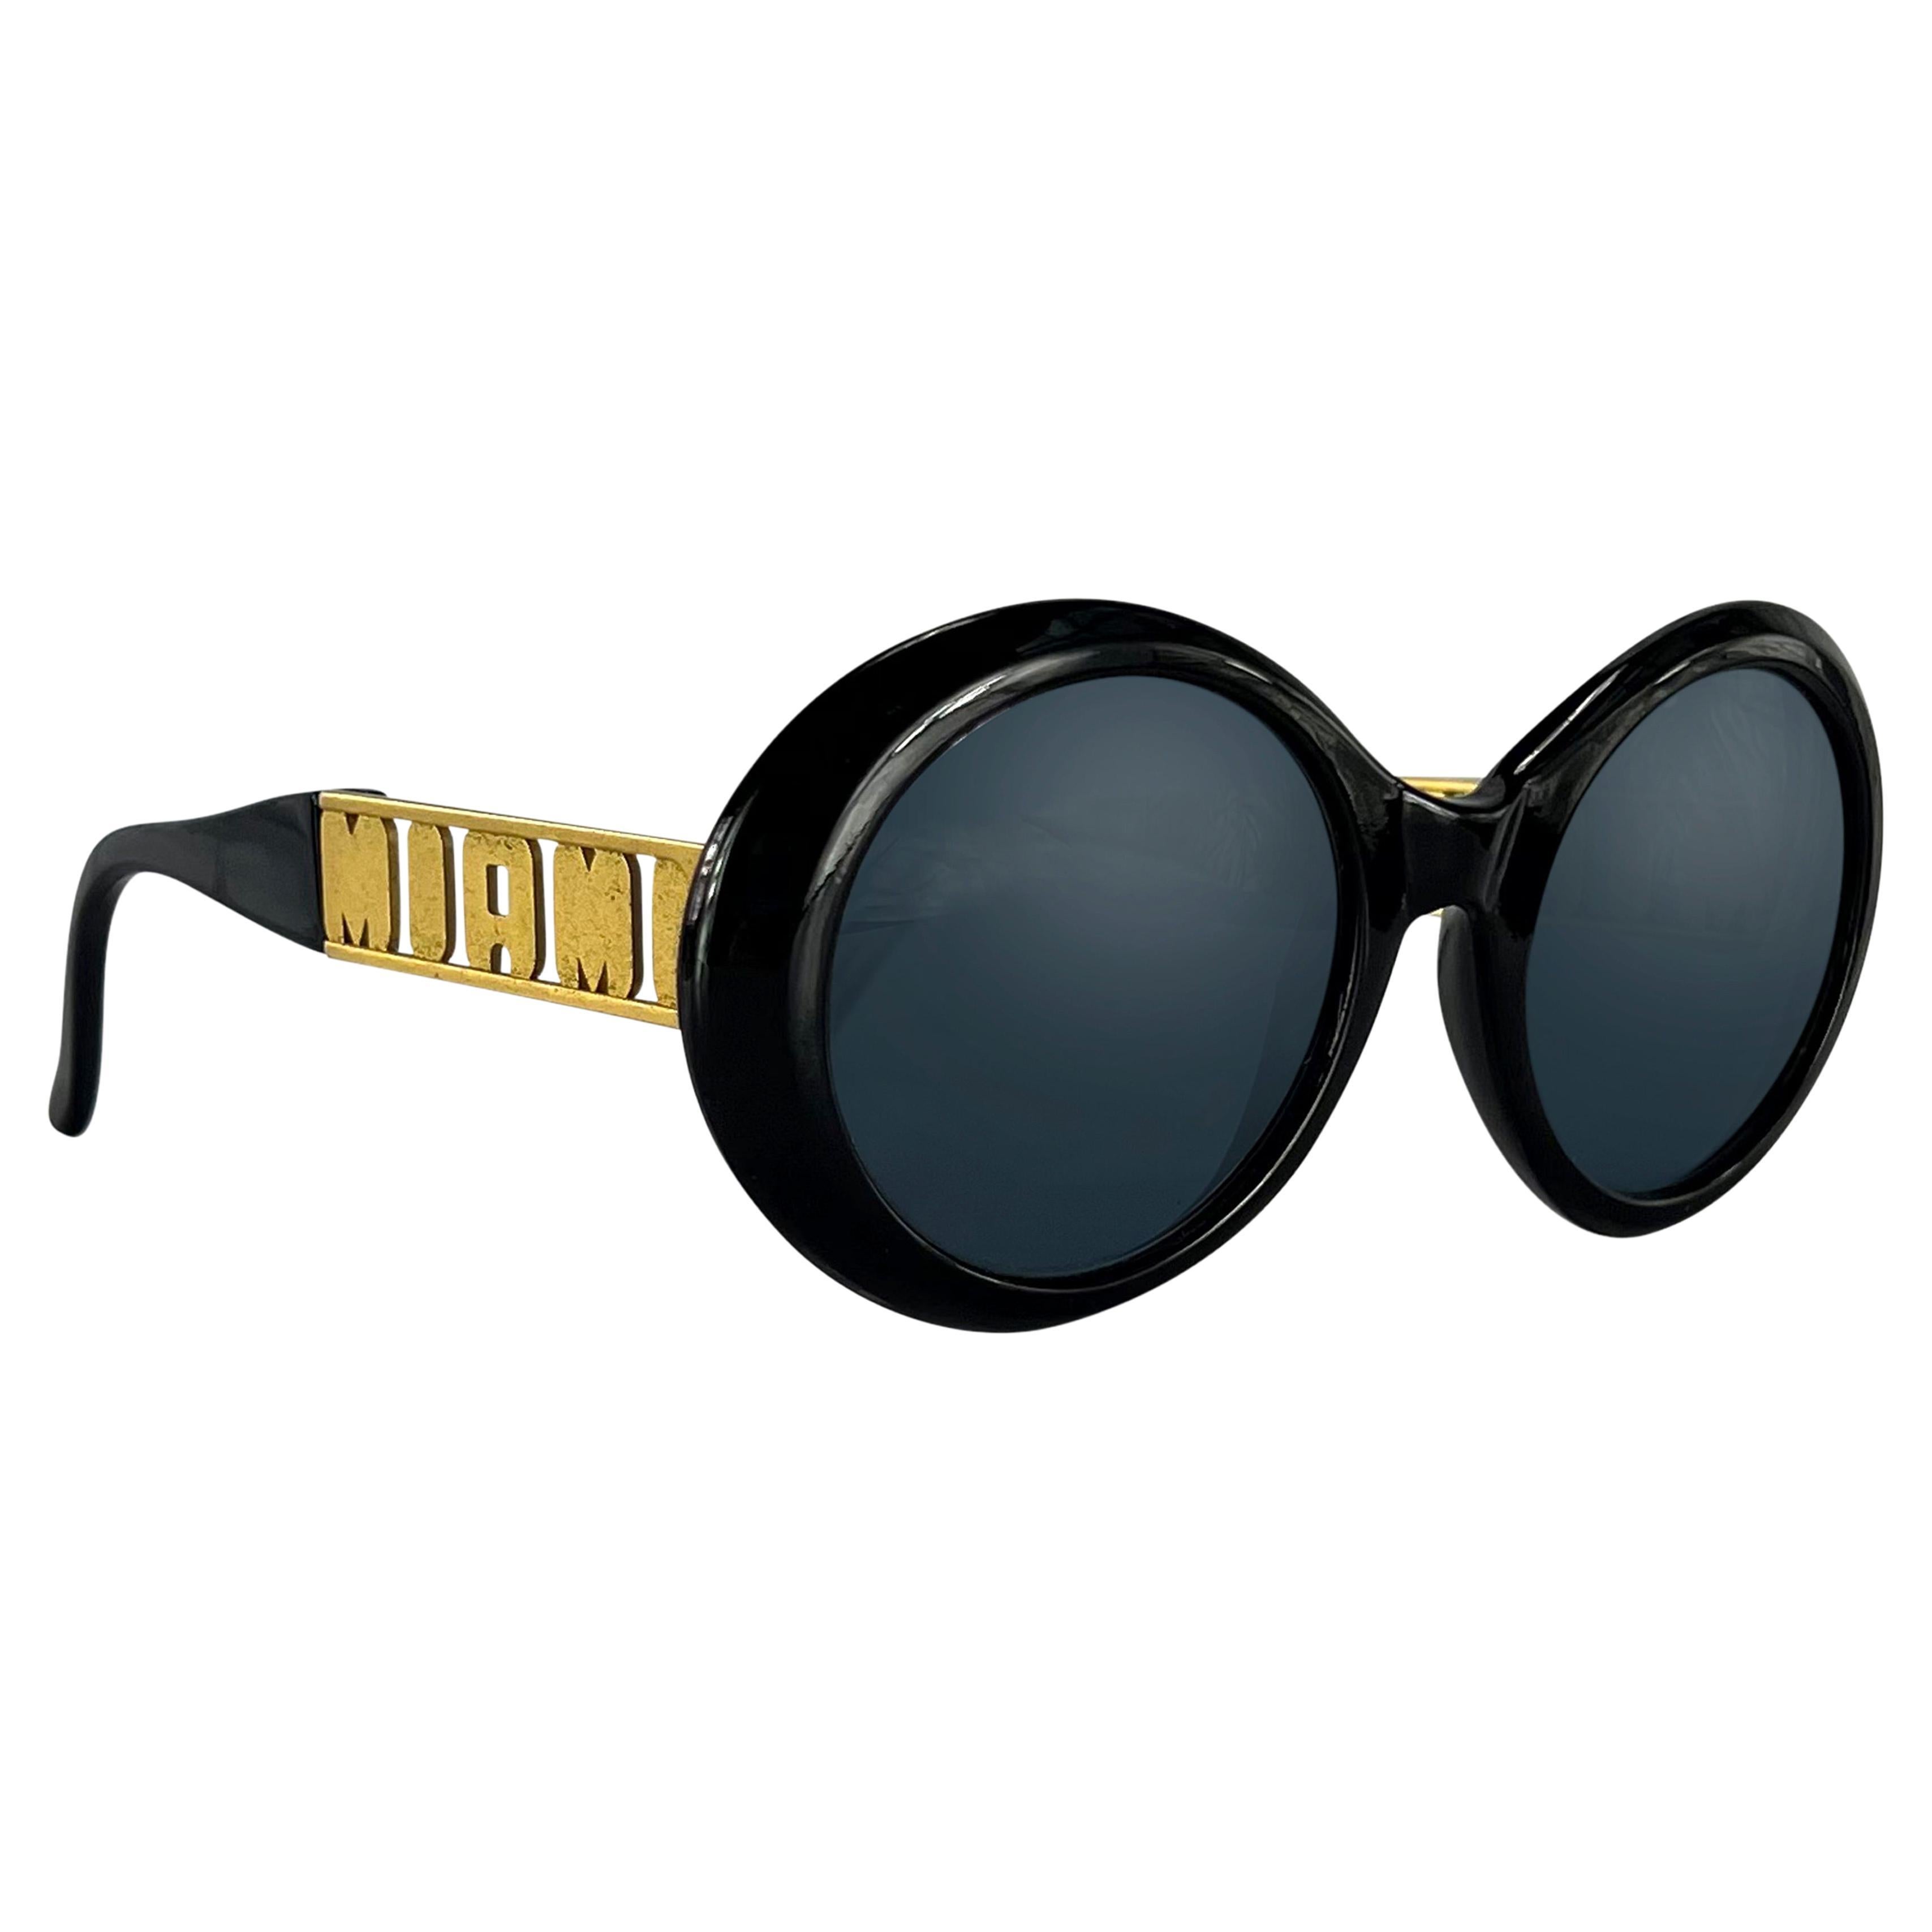 S/S 1993 Gianni Versace 'Miami' Gold Tone Metal Frame Black Round Sunglasses For Sale